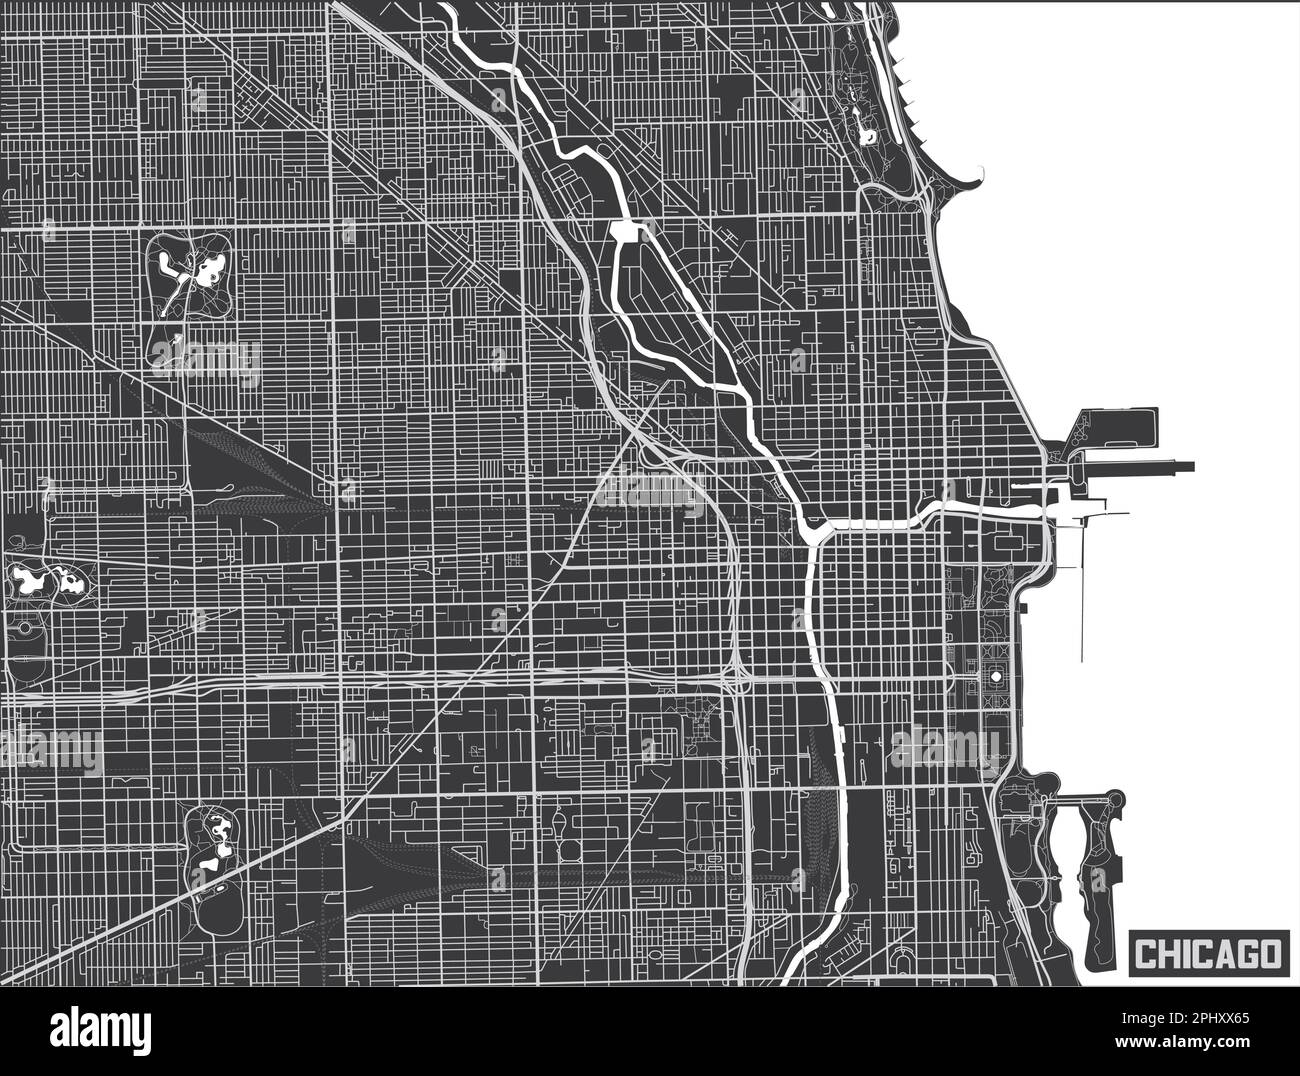 Minimalistic Chicago city map poster design. Stock Vector